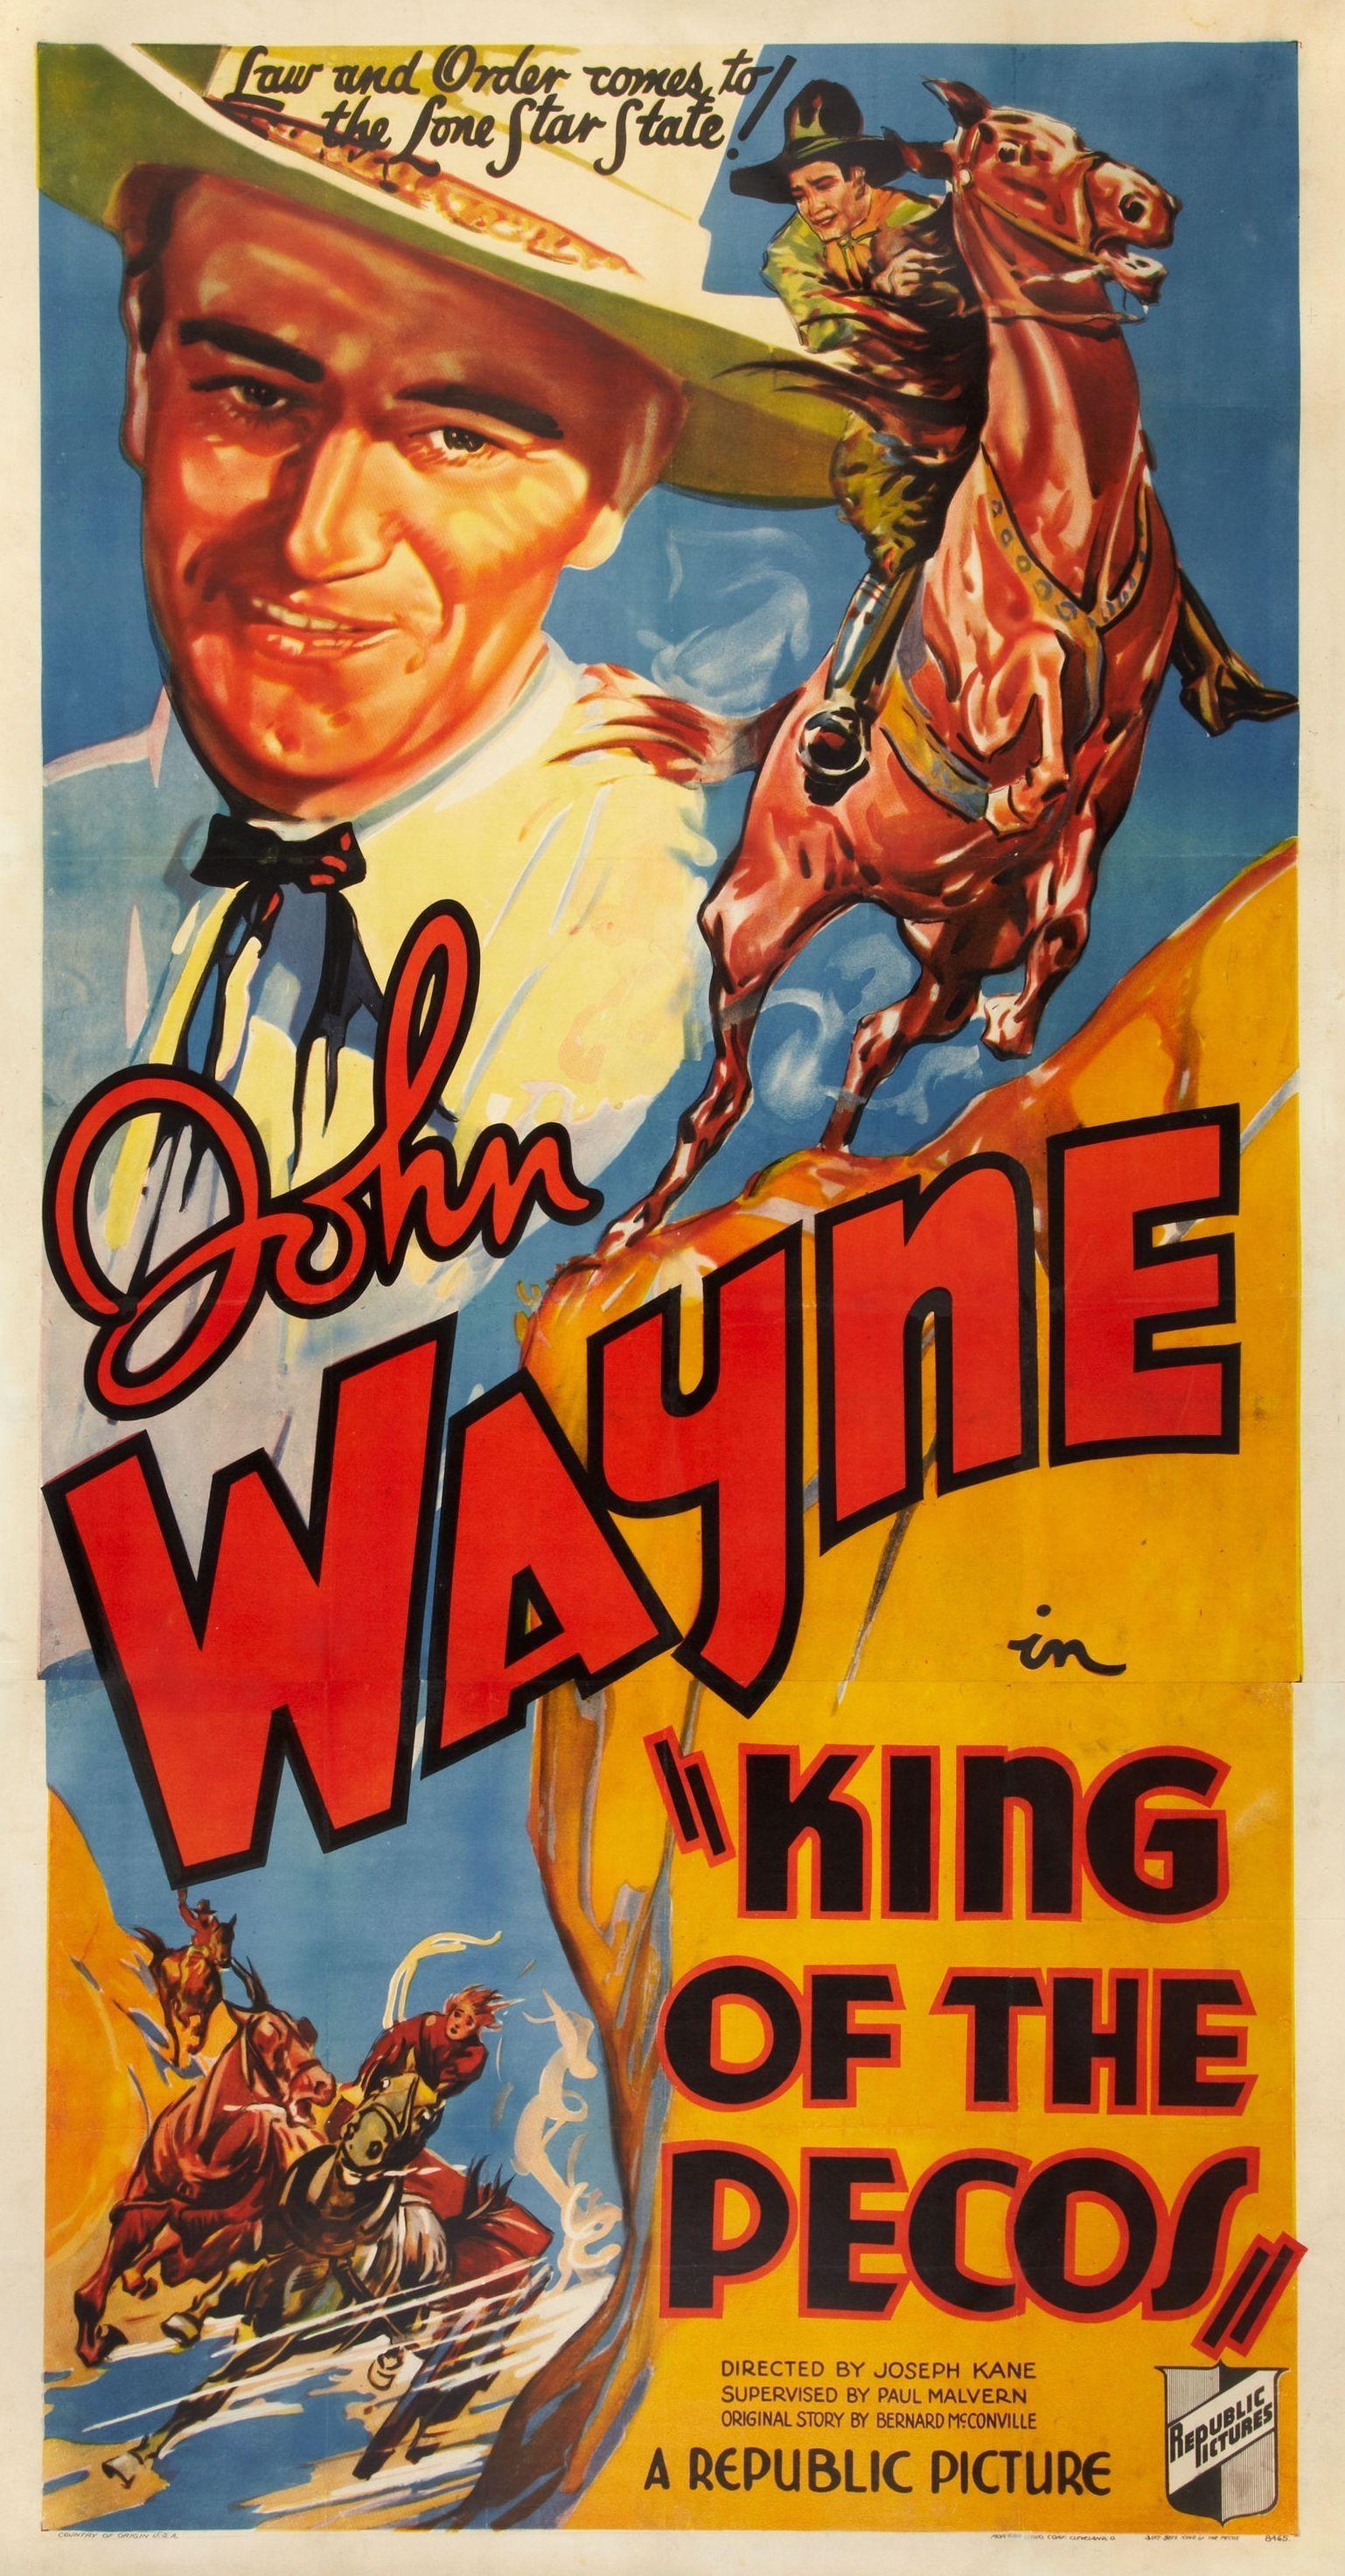 Постер фильма Король Пекос | King of the Pecos